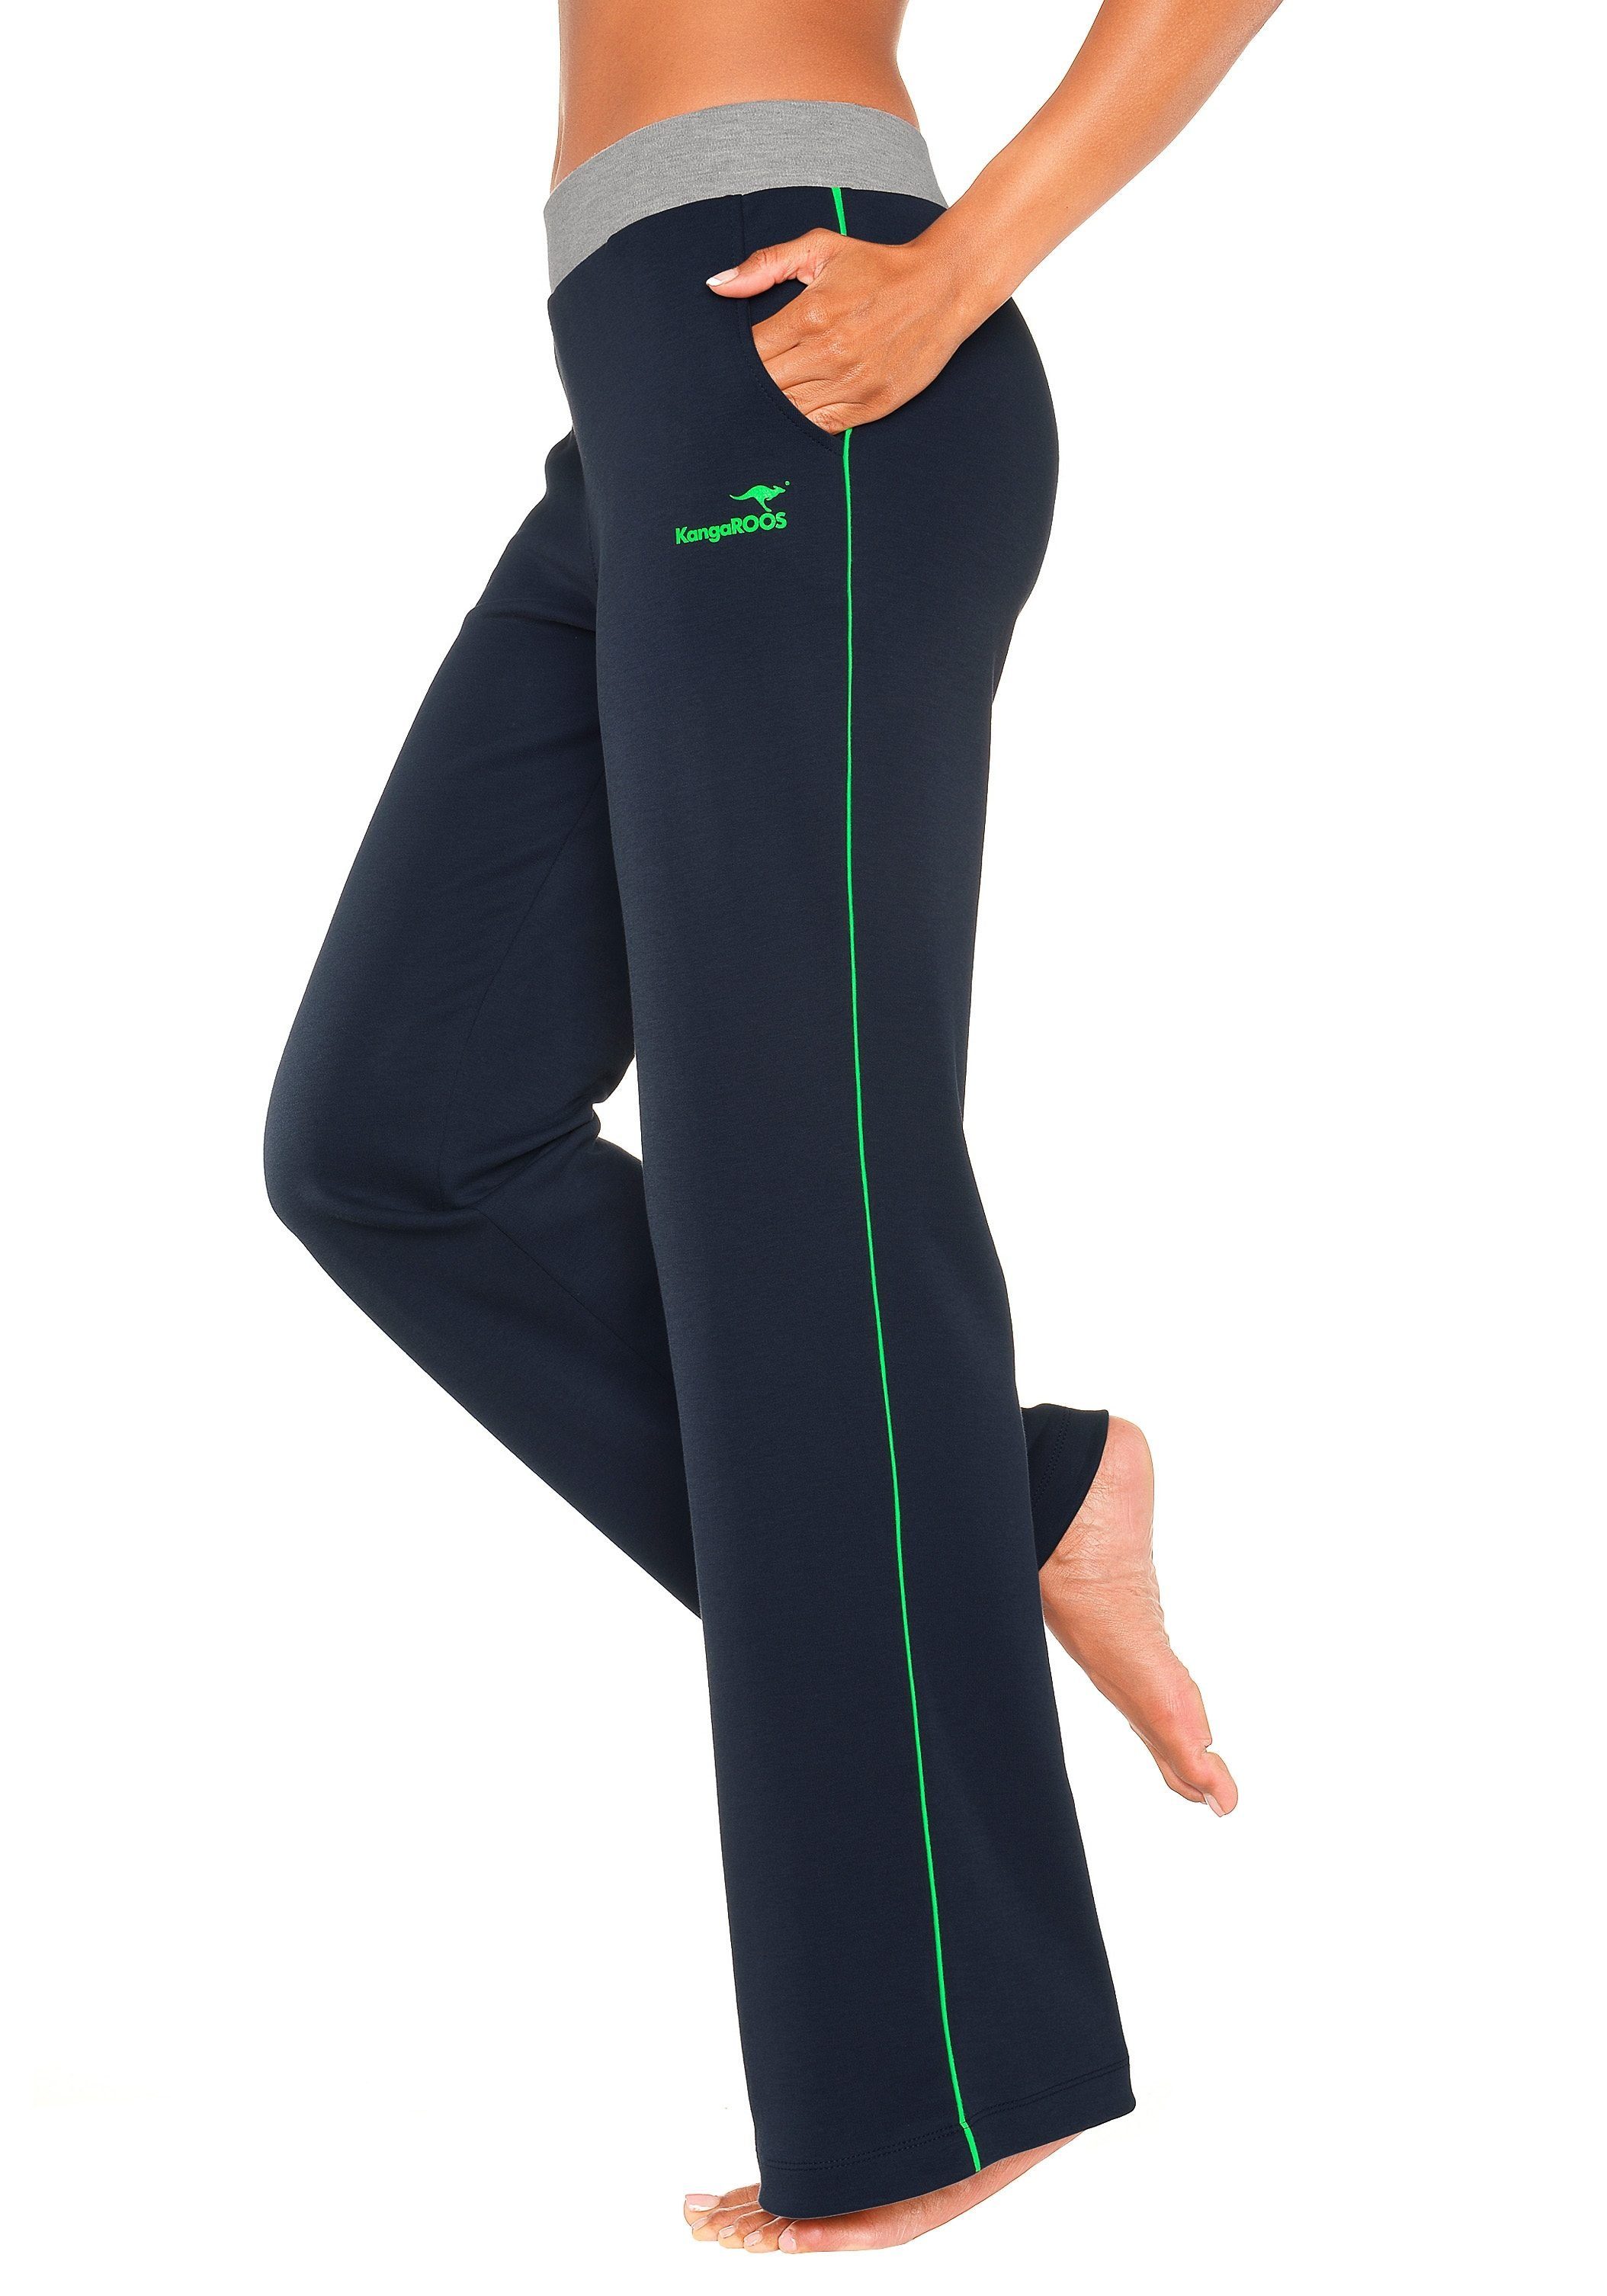 KangaROOS Relaxhose mit breitem Bund, Loungewear, Loungeanzug marine-grün-grün